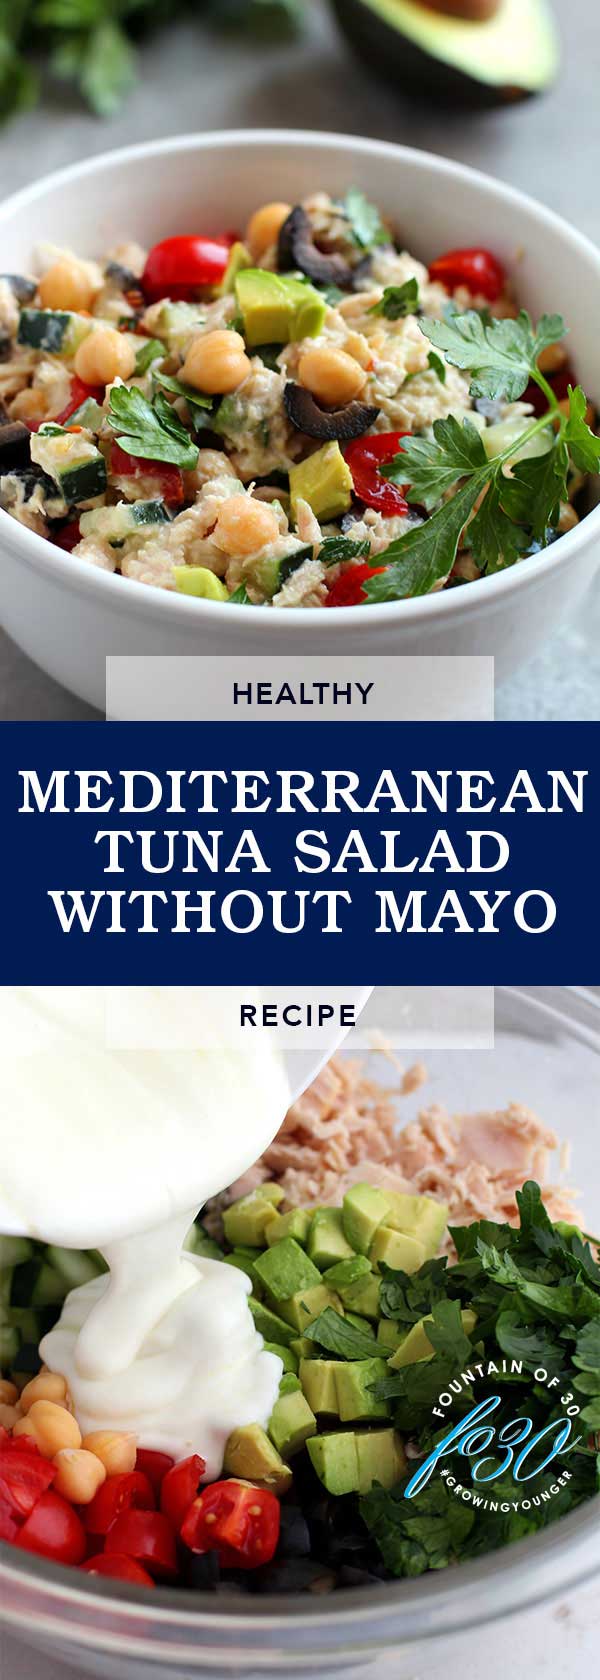 Healthy Mediterranean Tuna Salad without Mayo FountainOf30